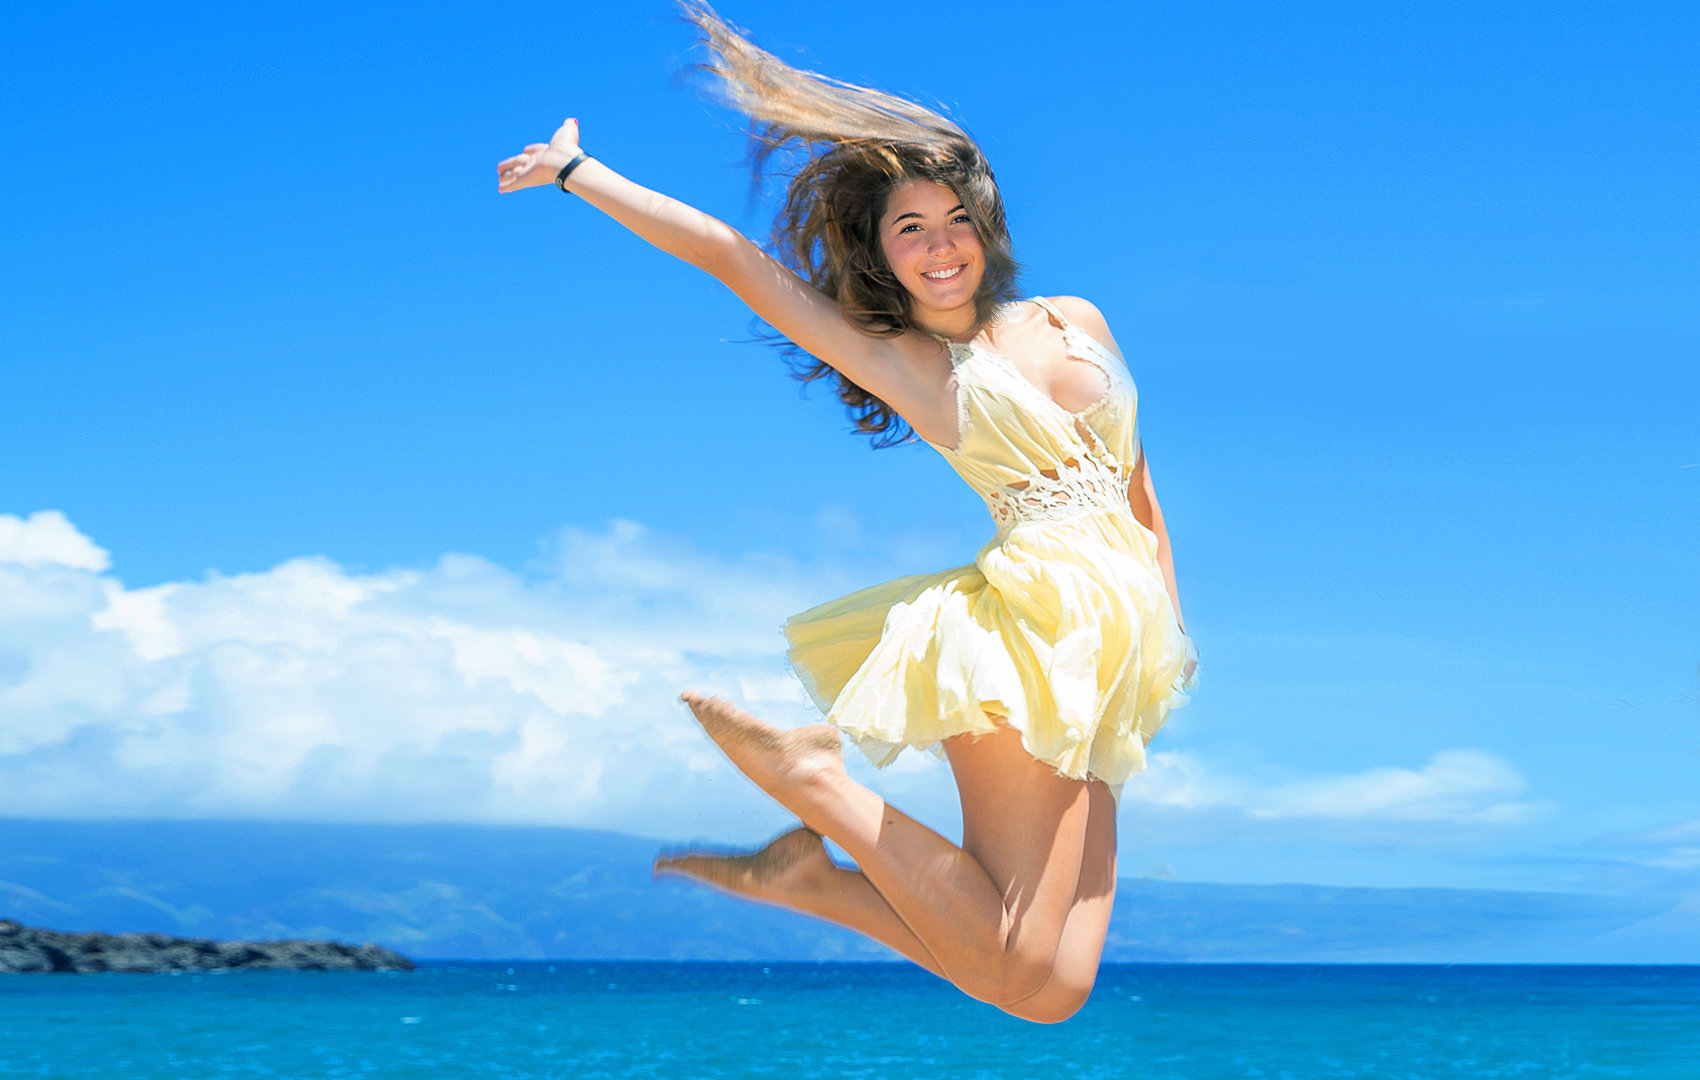 jumping high in the air on a Oahu beach.